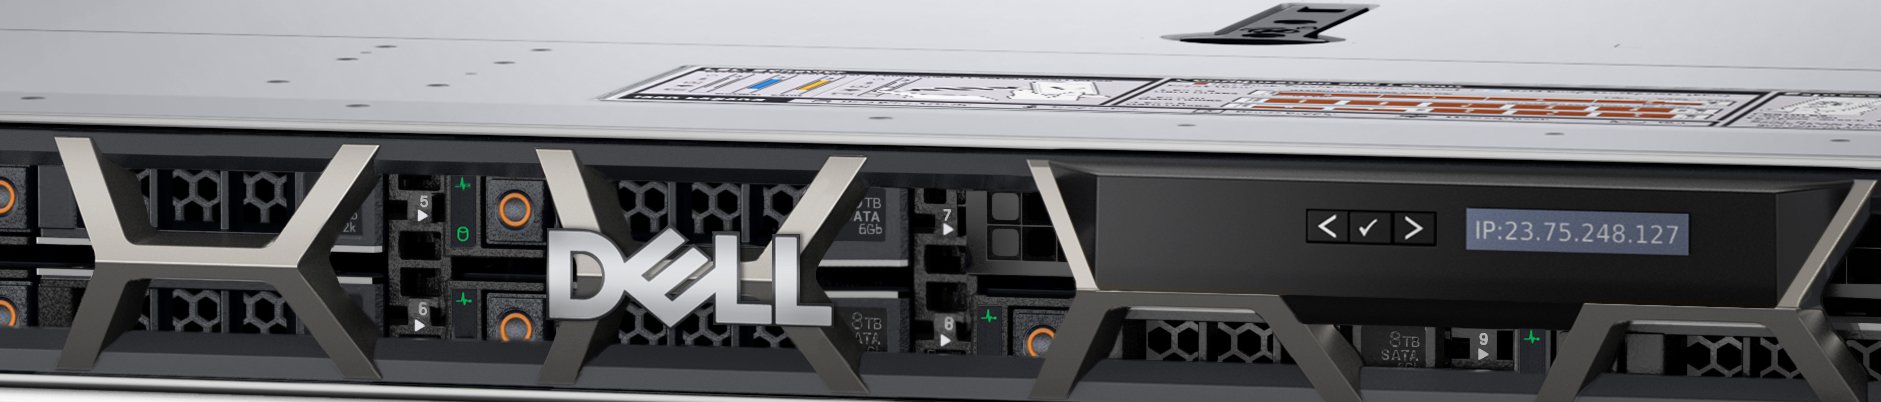 PowerEdge R450 Rack Server